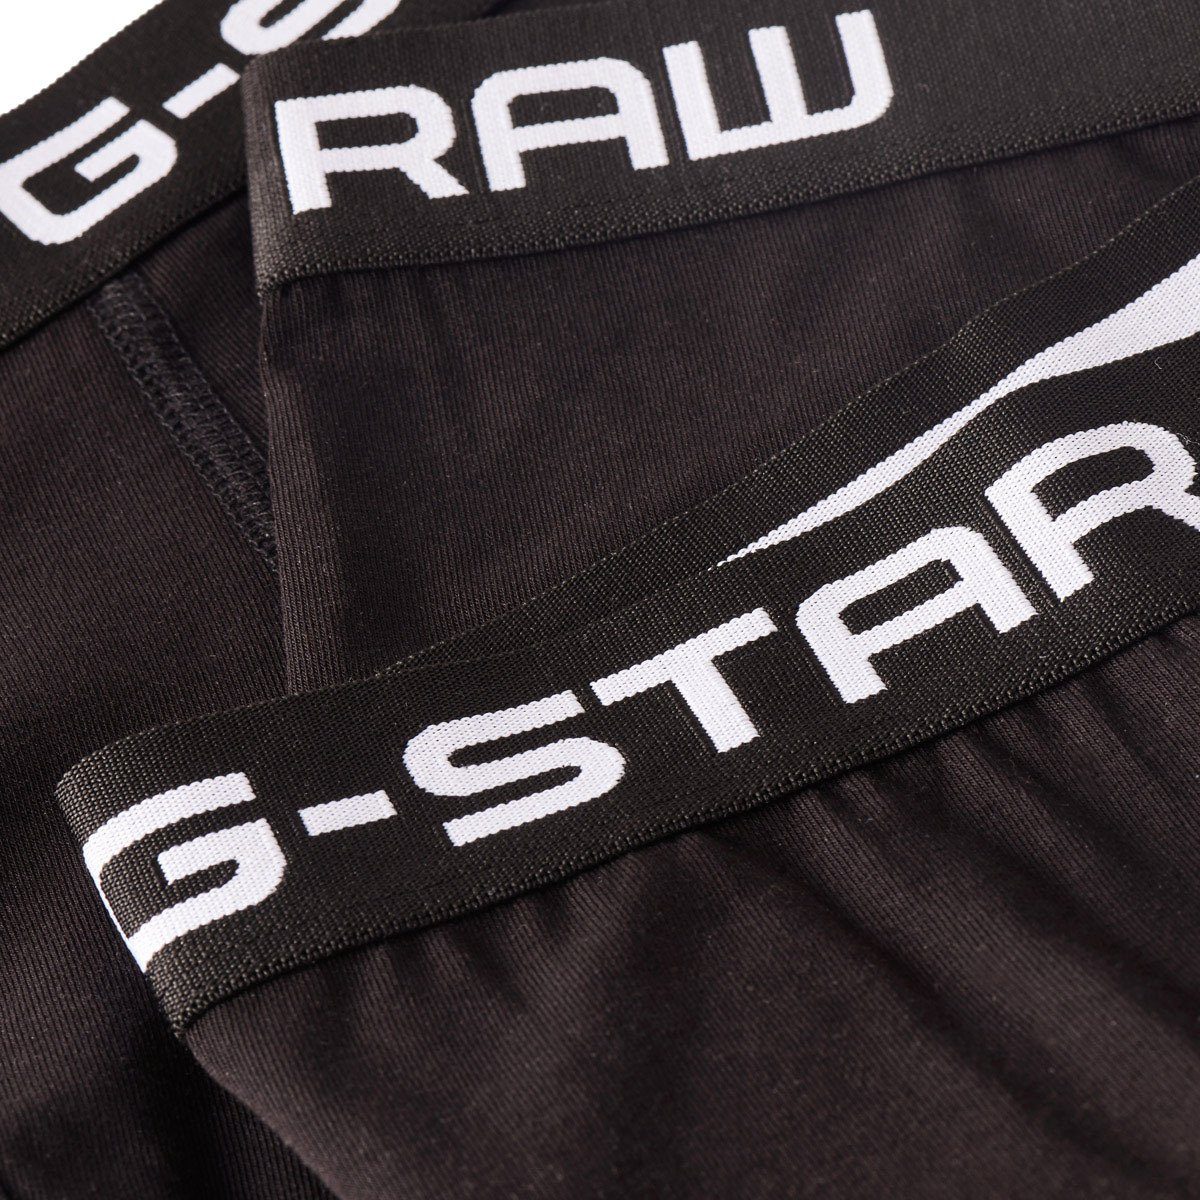 Logobund Pack Shorts G-Star RAW Classic - 6er Herren Schwarz Trunk, Boxer